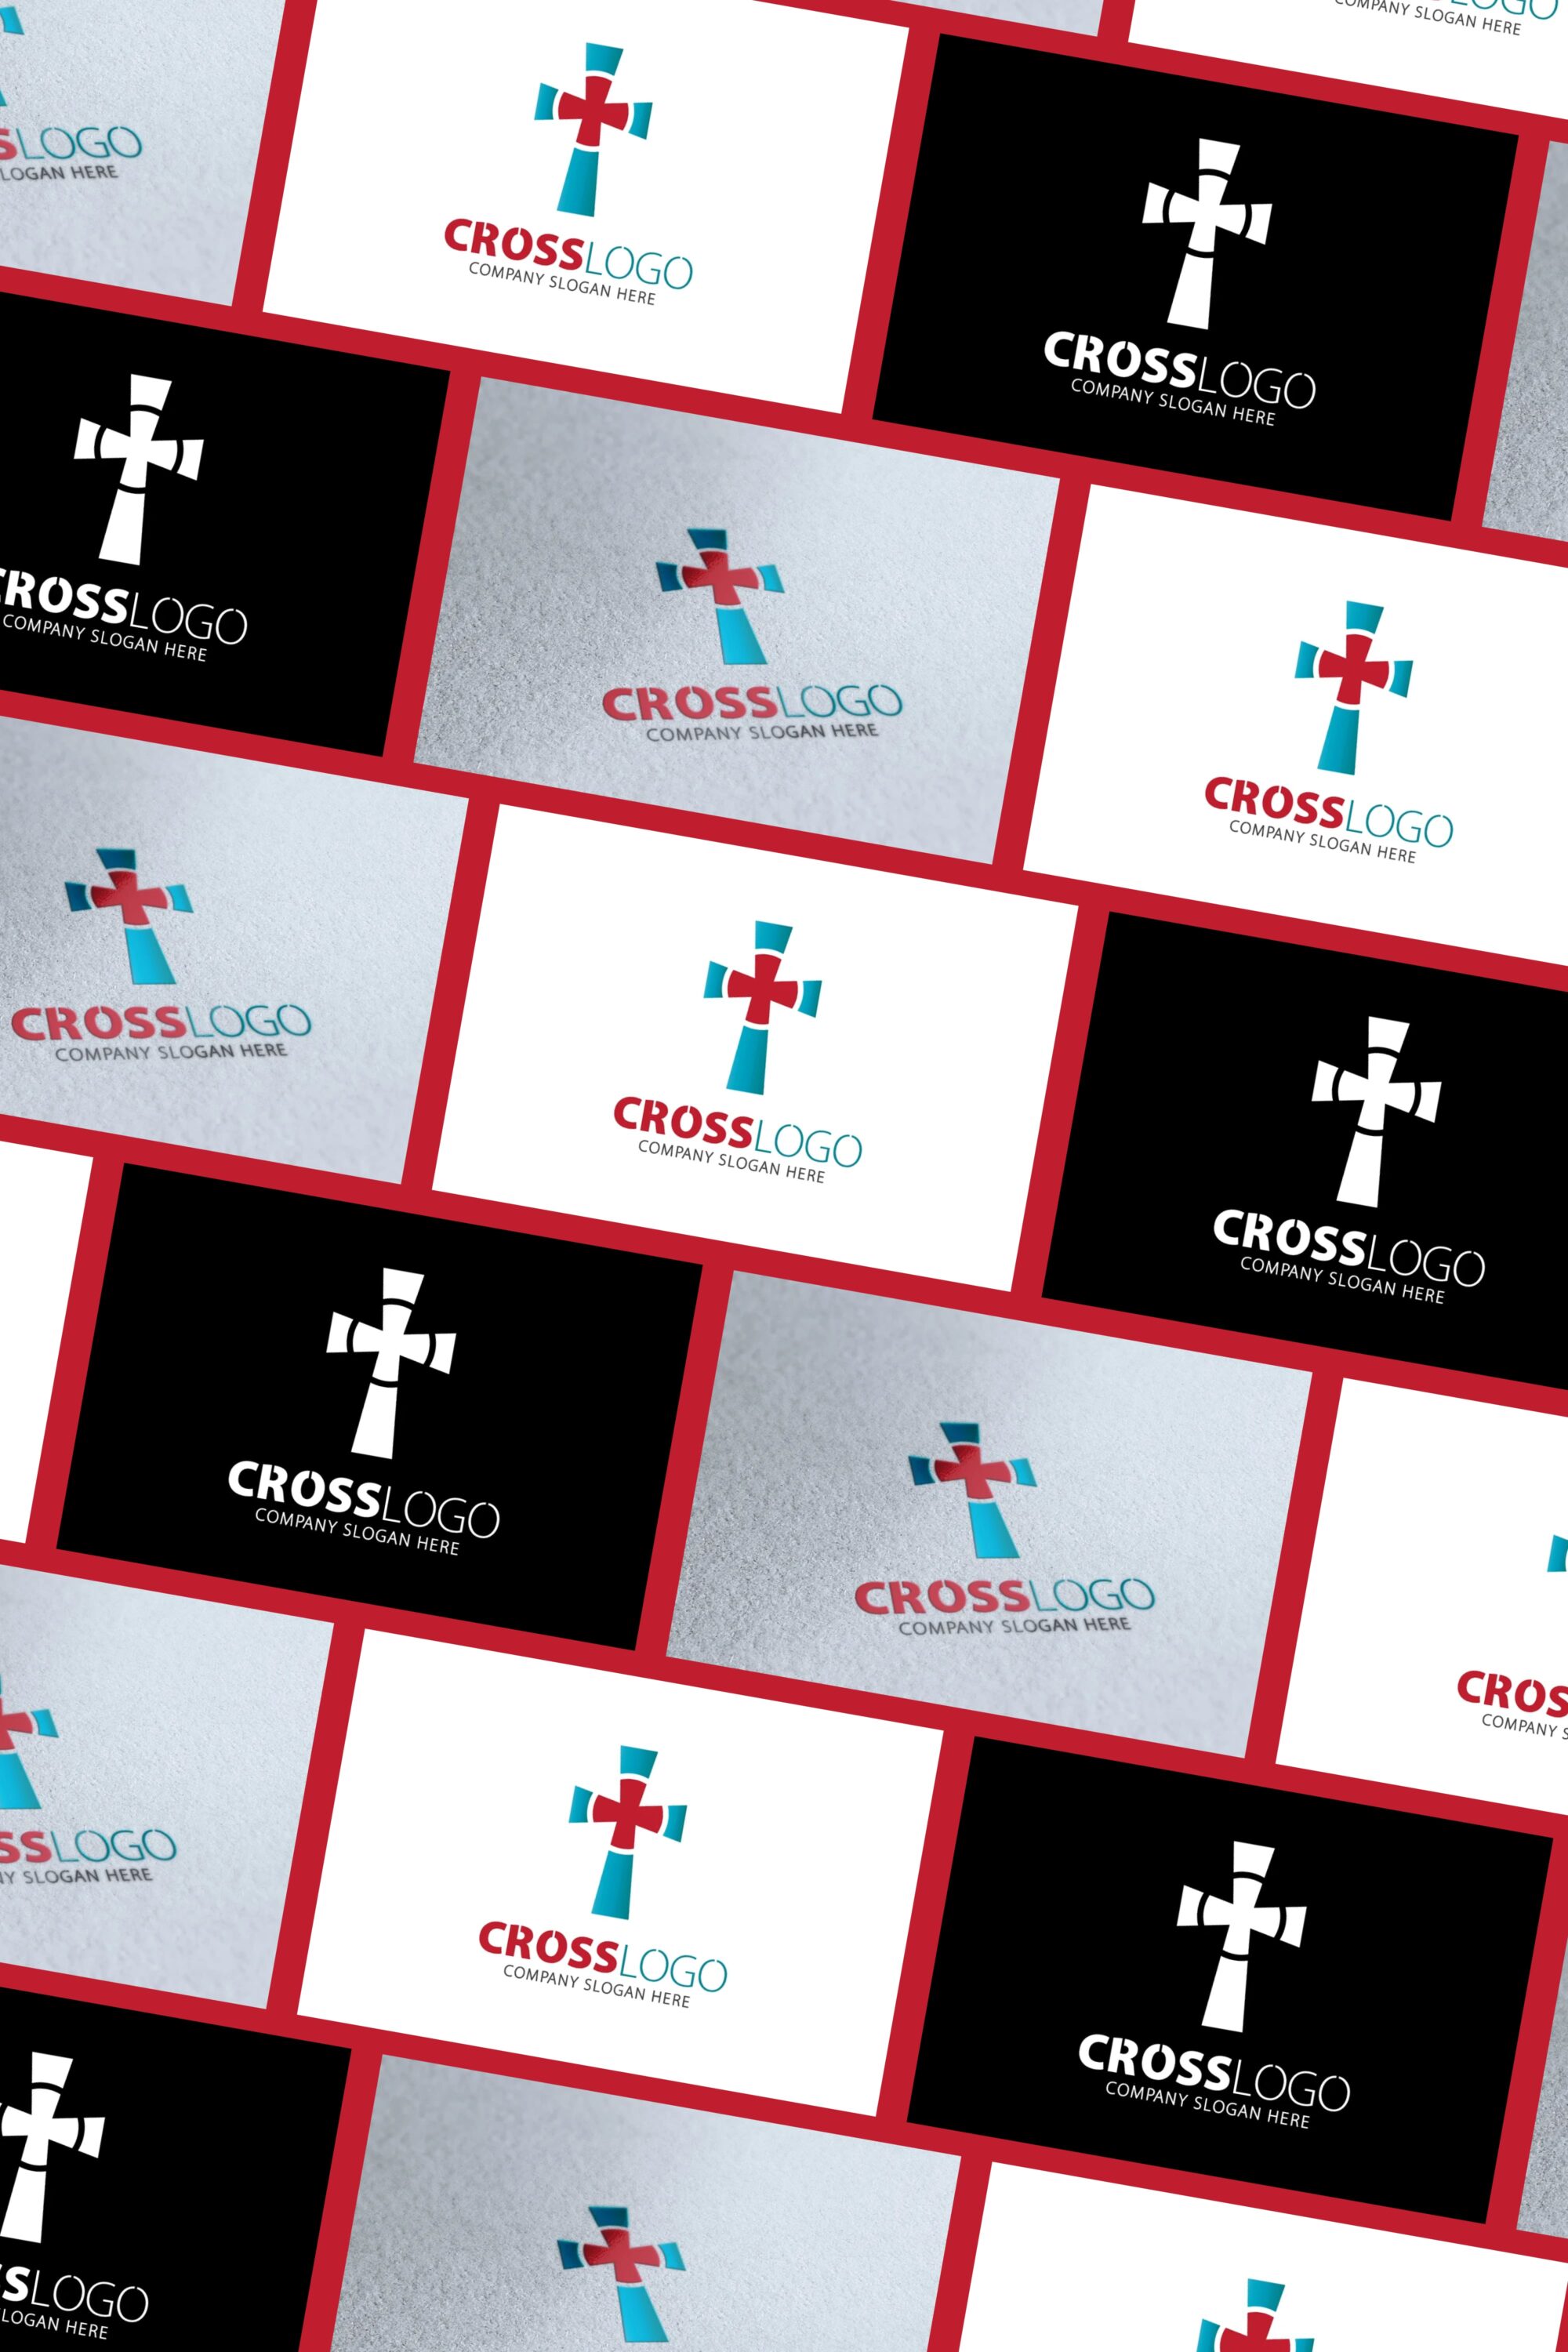 Diverse of church logos.